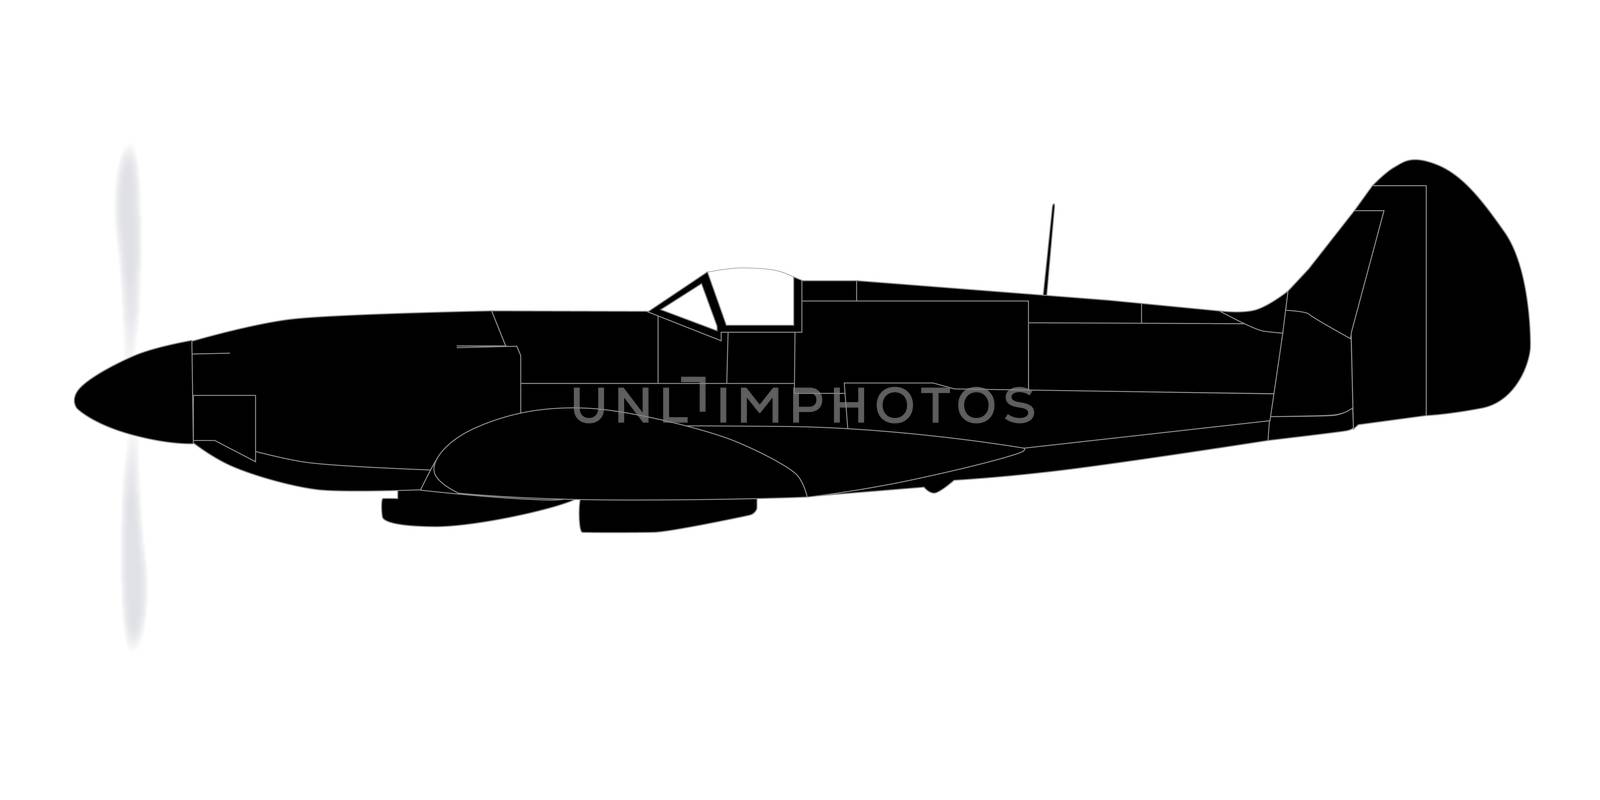 A Supermarine World War II Spitfire Mark XIV fighter plane in silhouette